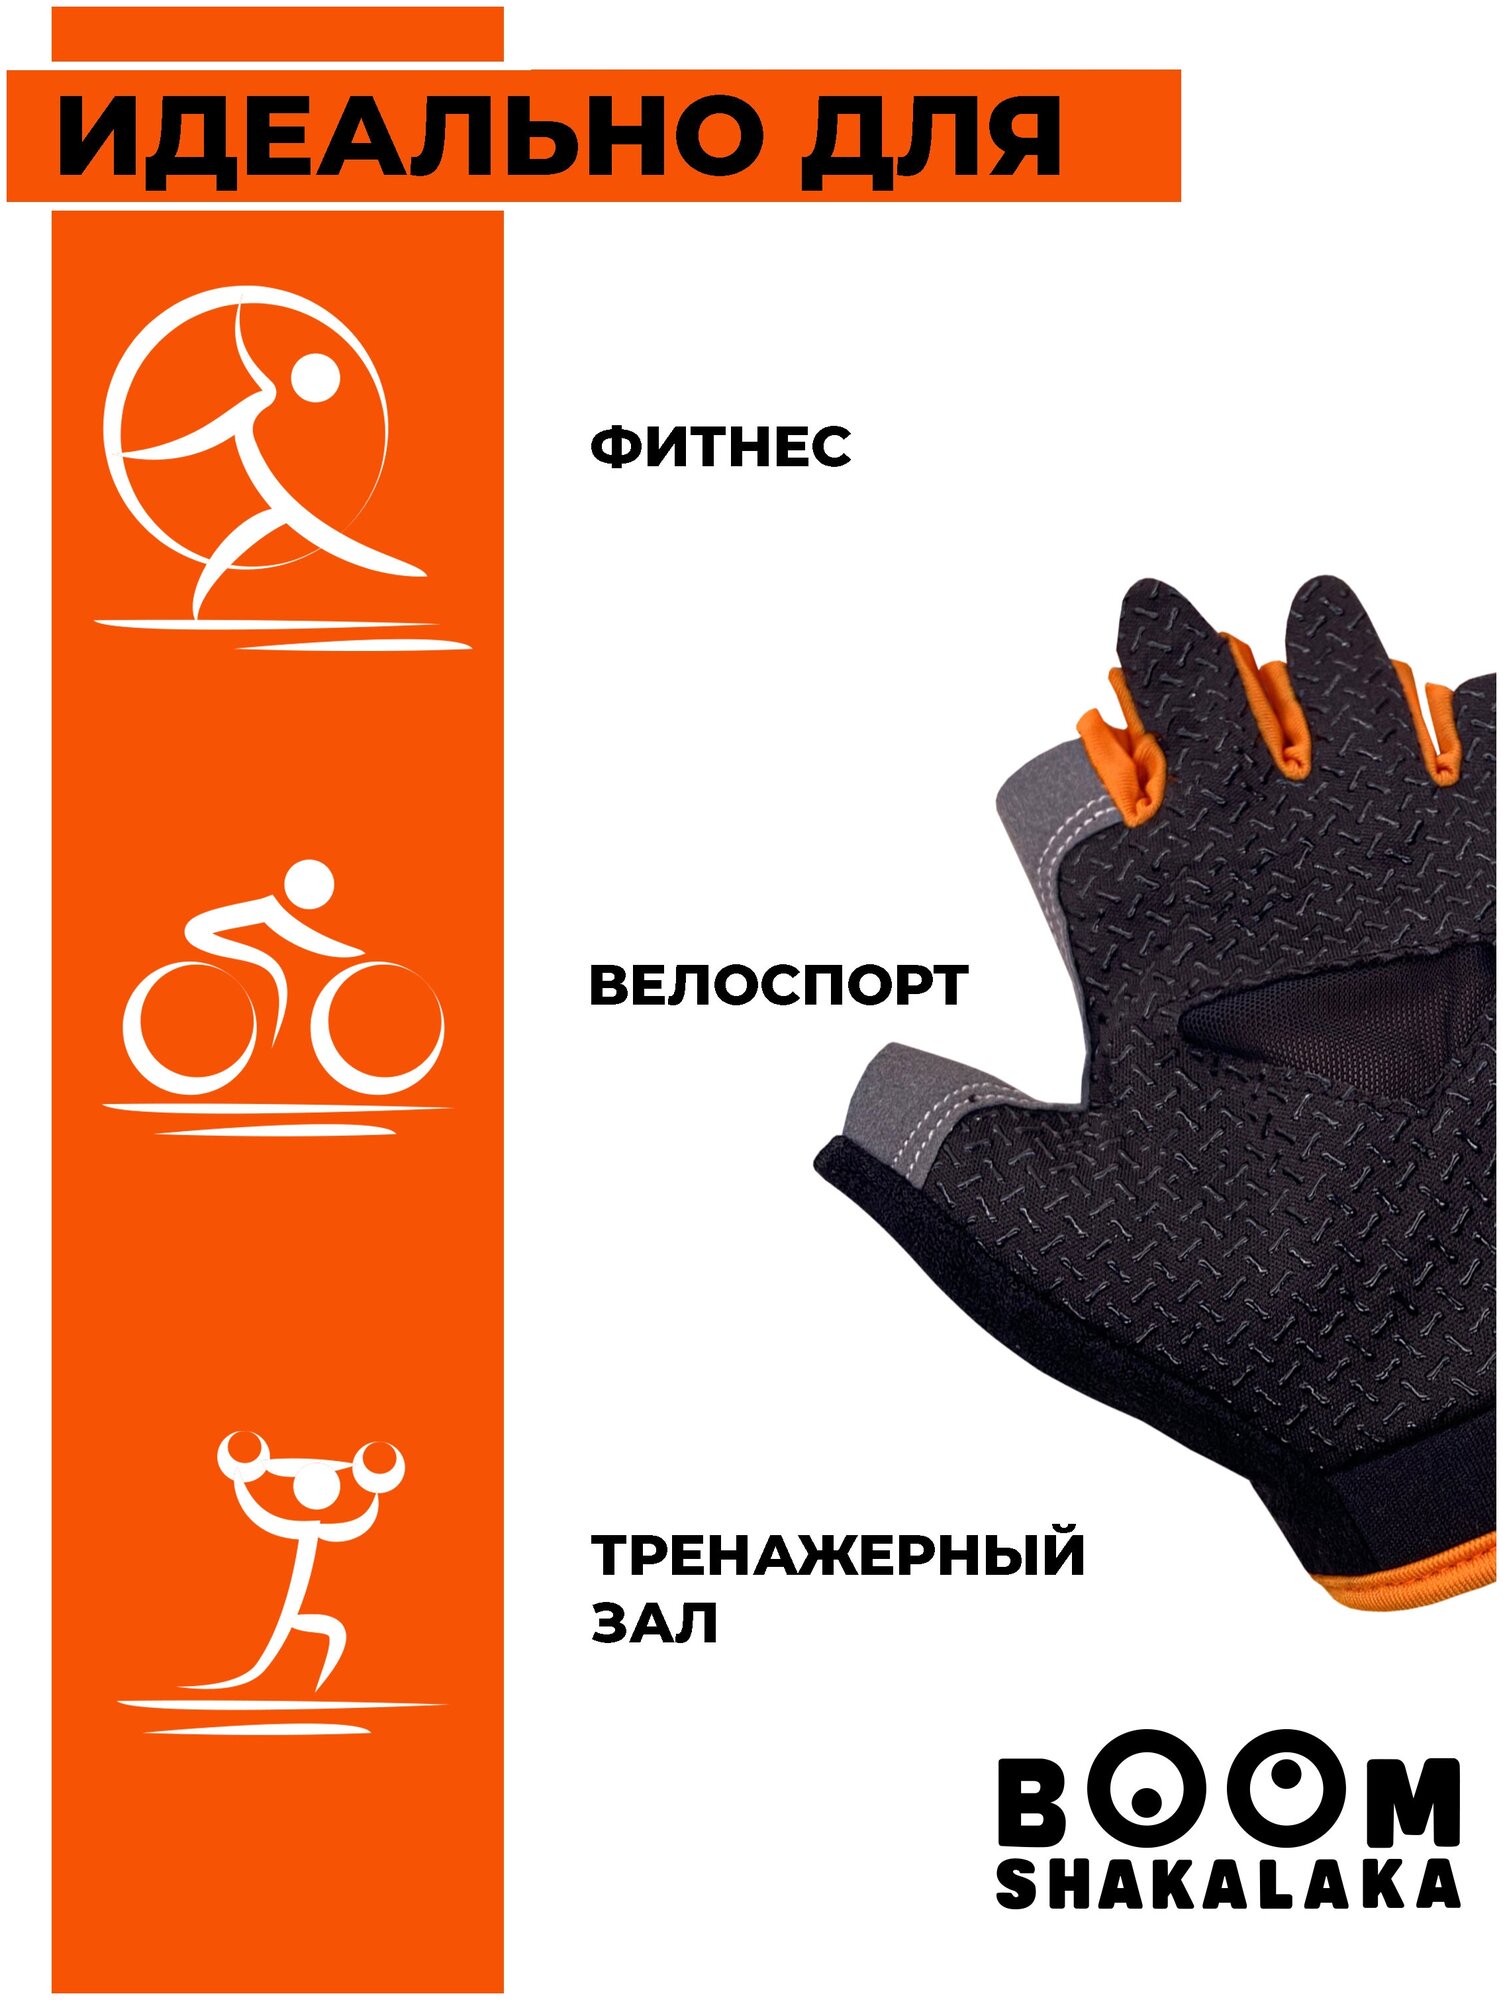 Перчатки для велоспорта Boomshakalaka, цвет черно-оранжевый, размер L, обхват ладони 210-230 мм.